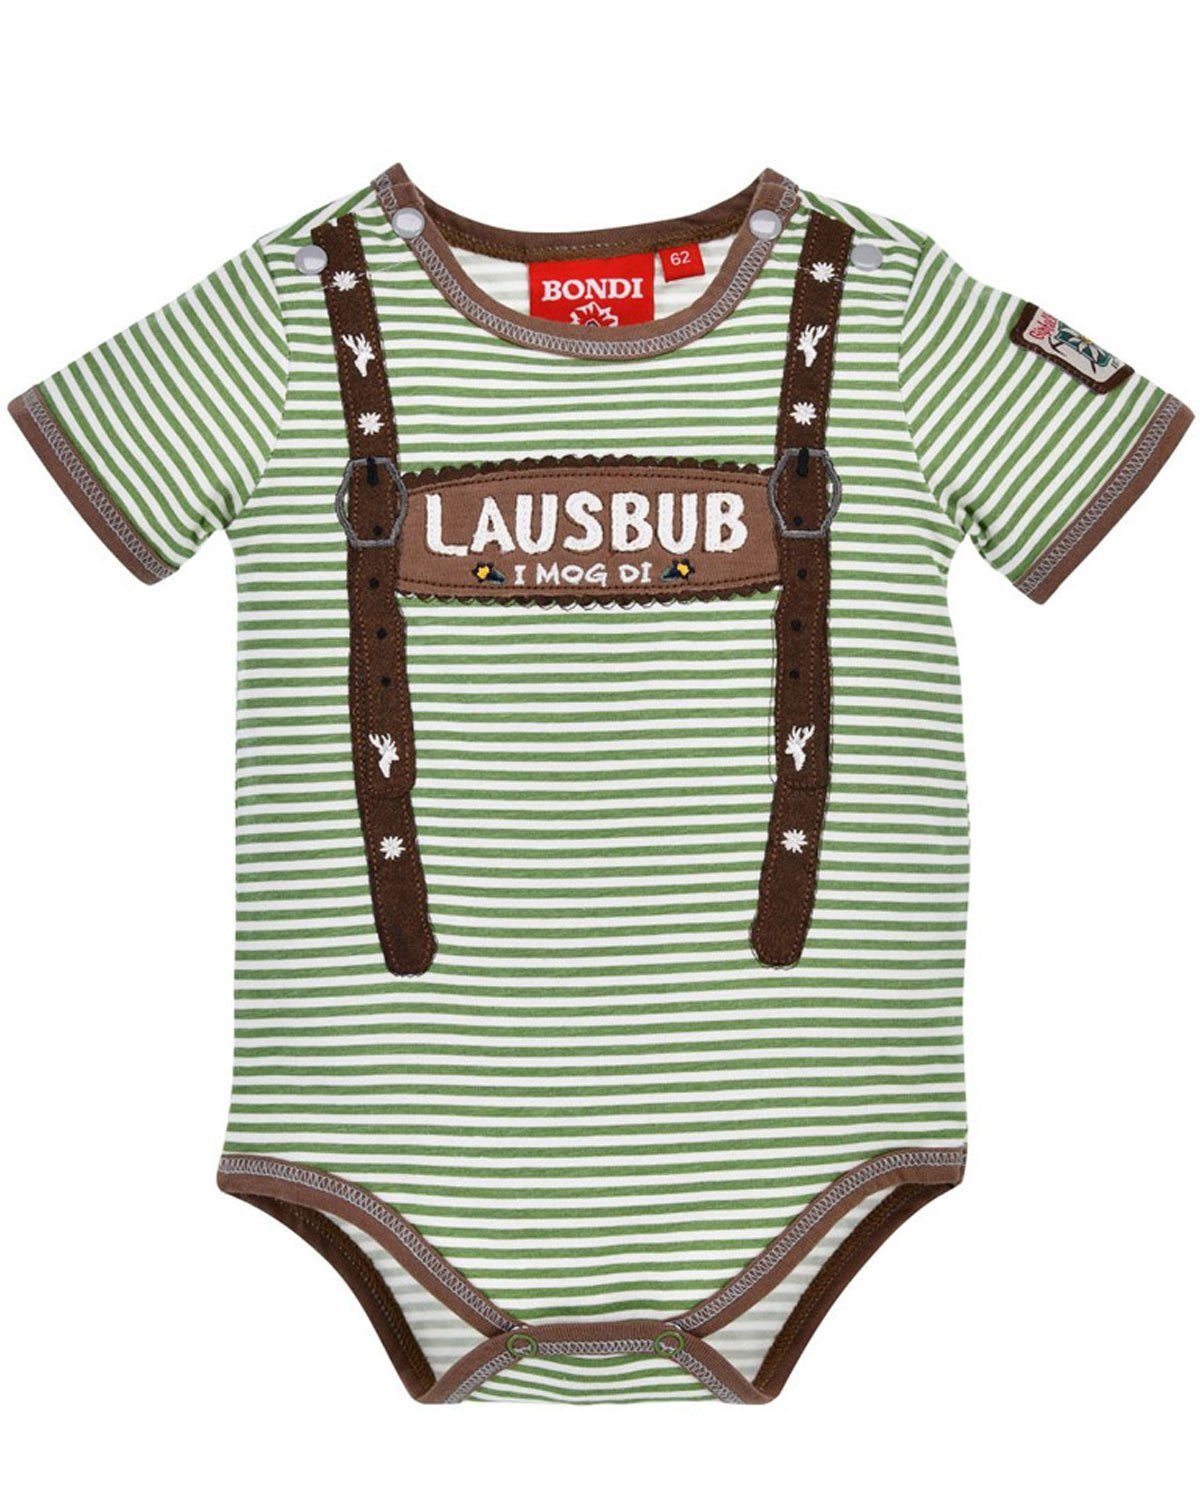 Kurzarm 'Lausbub' Body ges Grün BONDI 91636, Baby BONDI Strampler